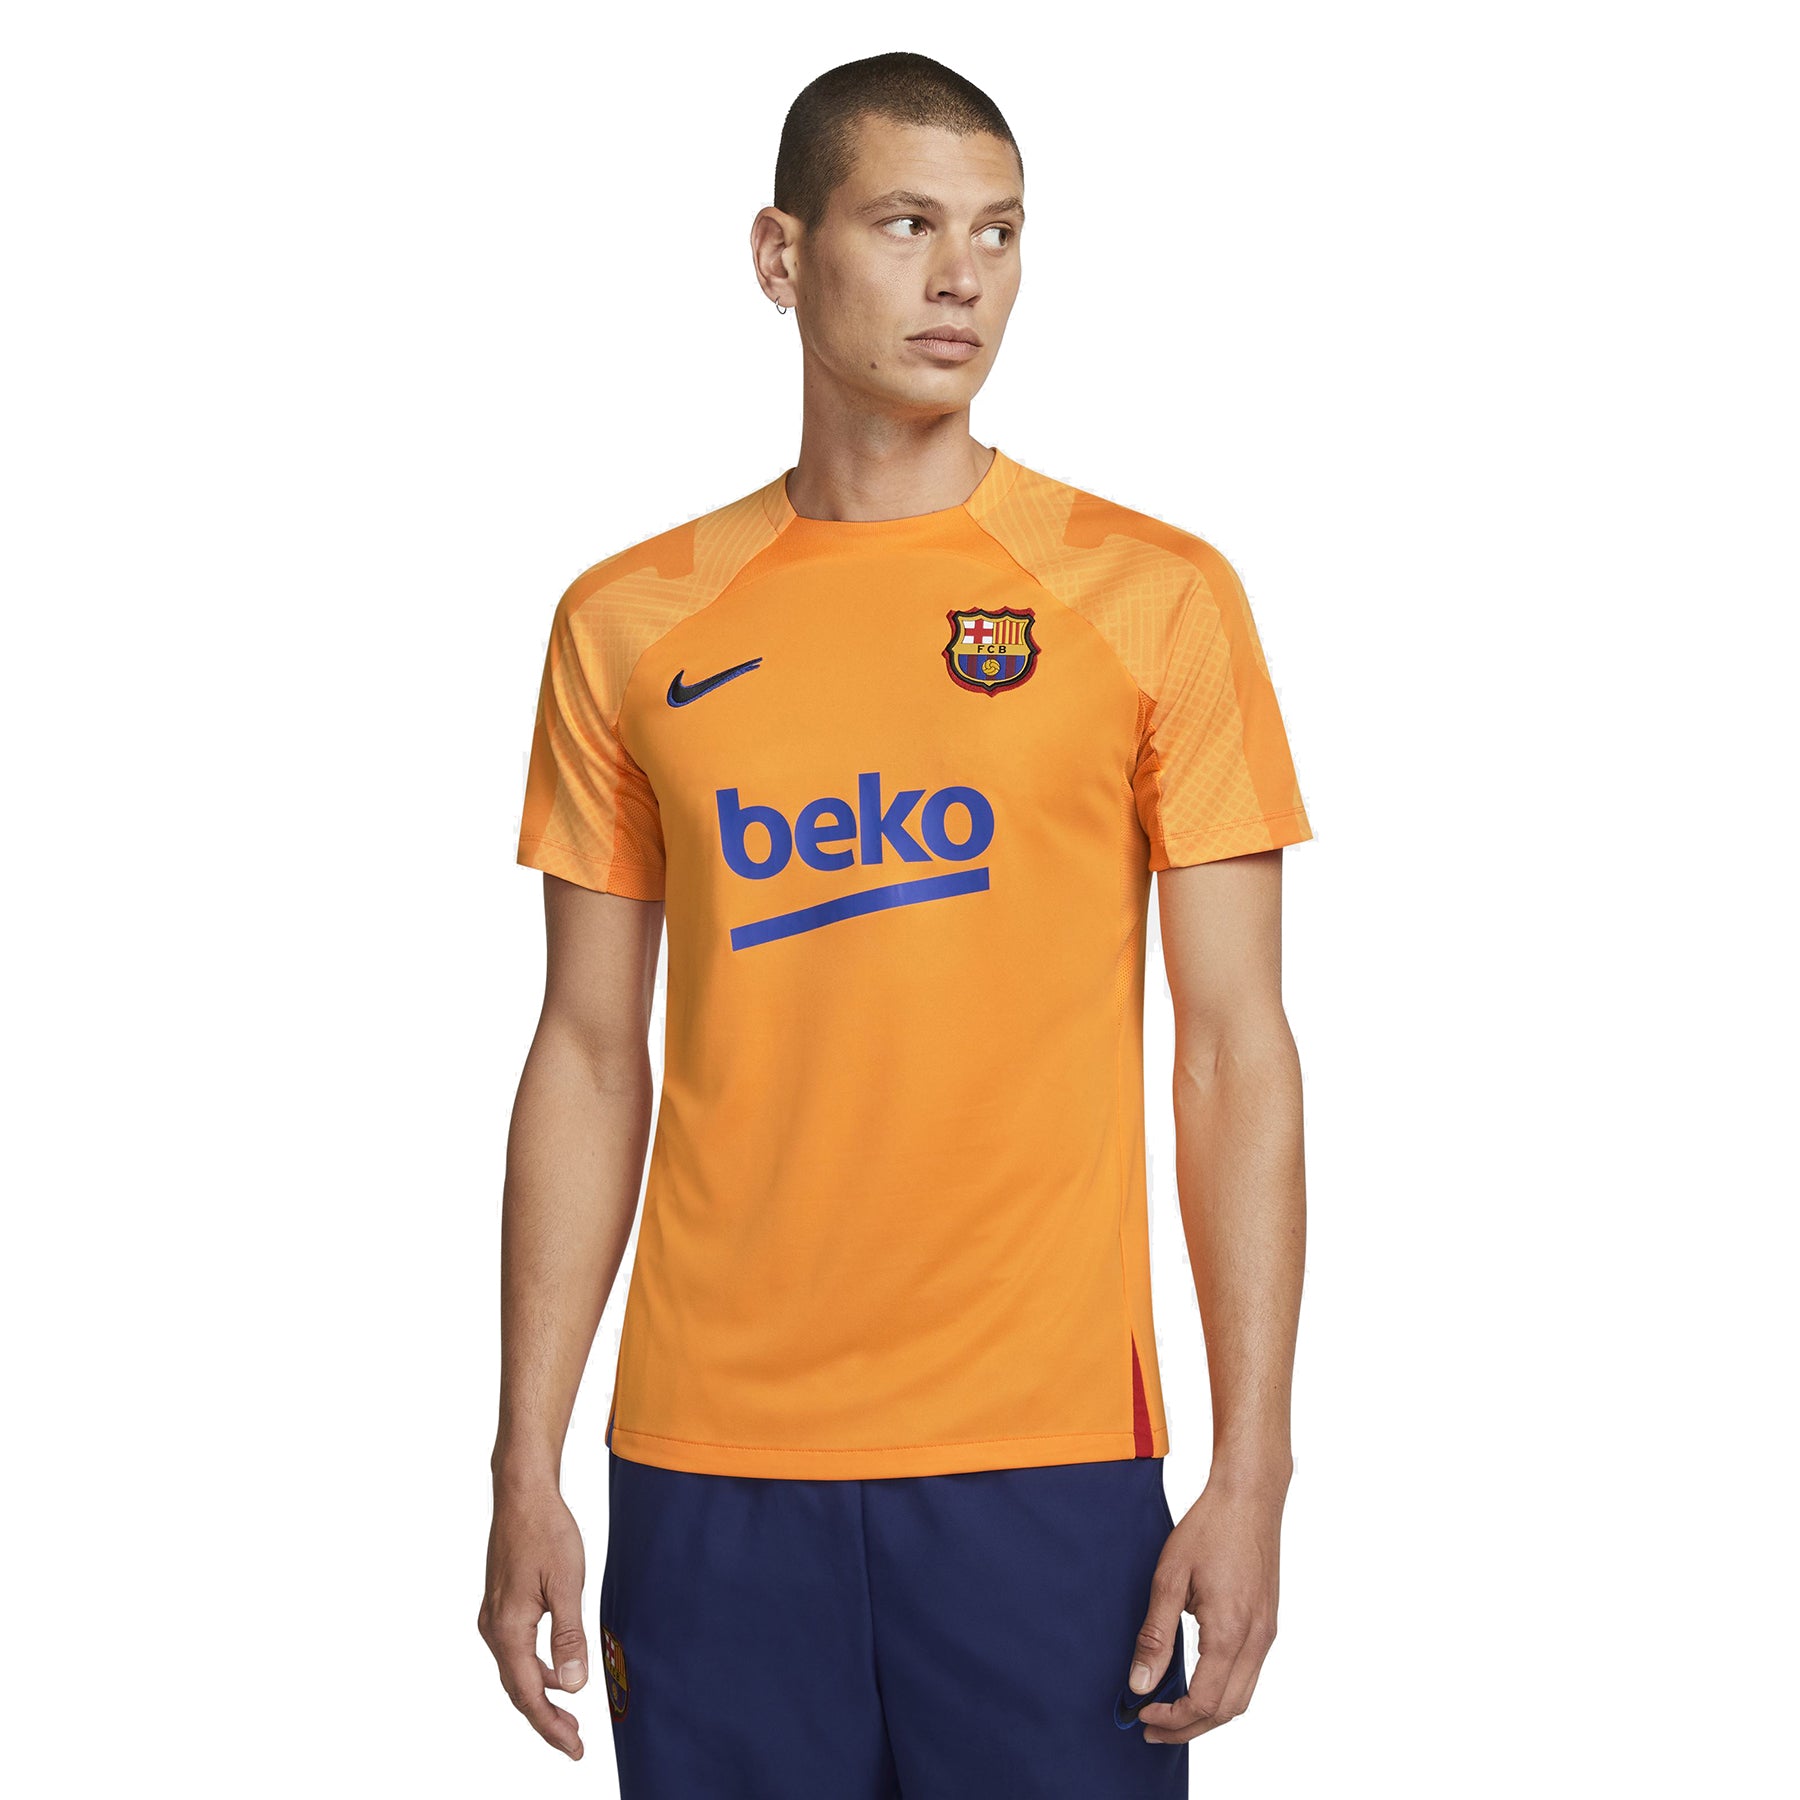 Camiseta de fútbol FC Barcelona hombre